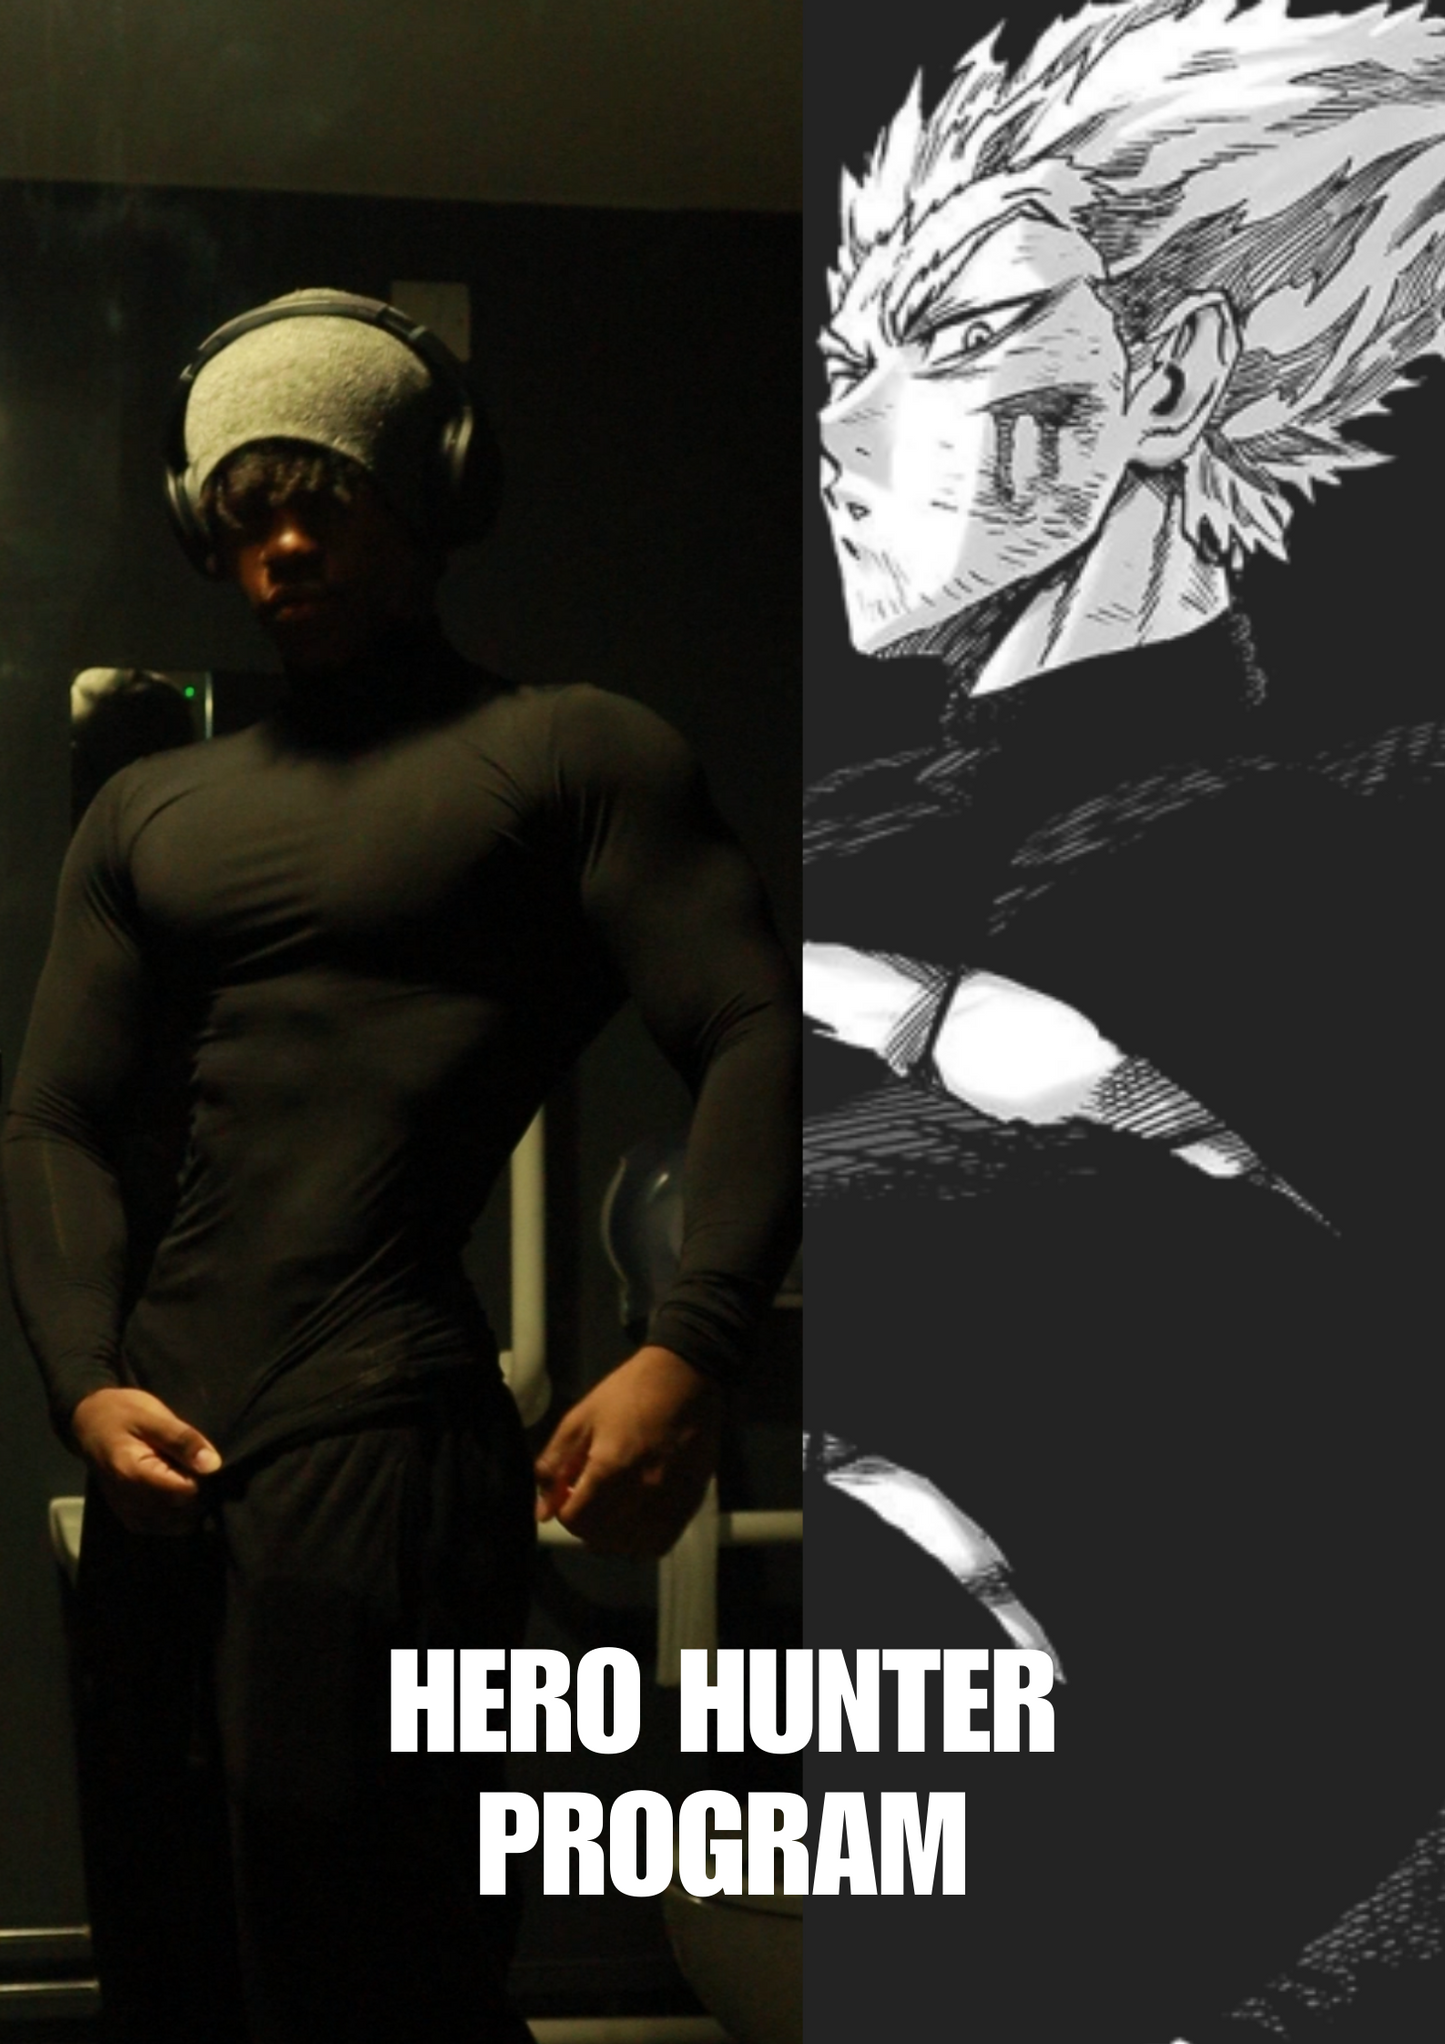 The Hero Hunter Program